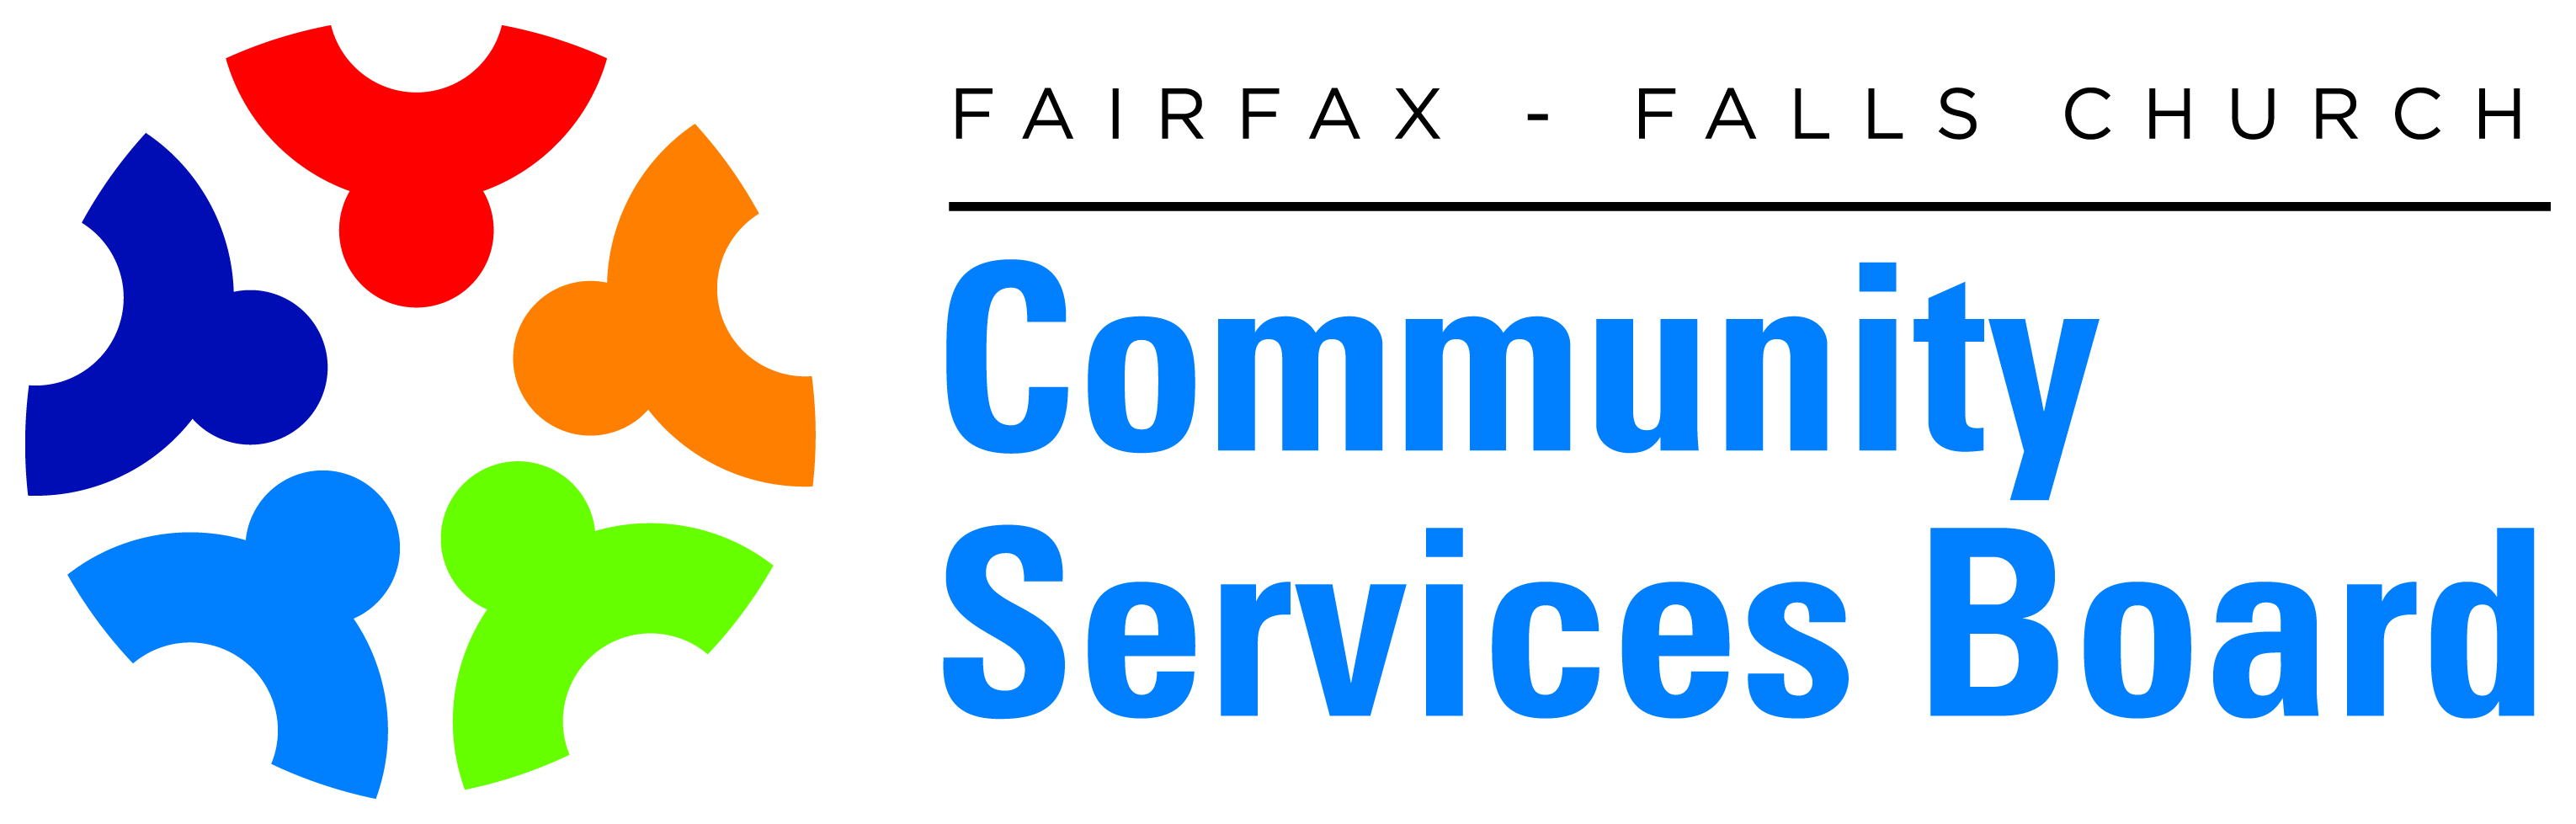 Fairfax-Falls Church Community Services Board logo